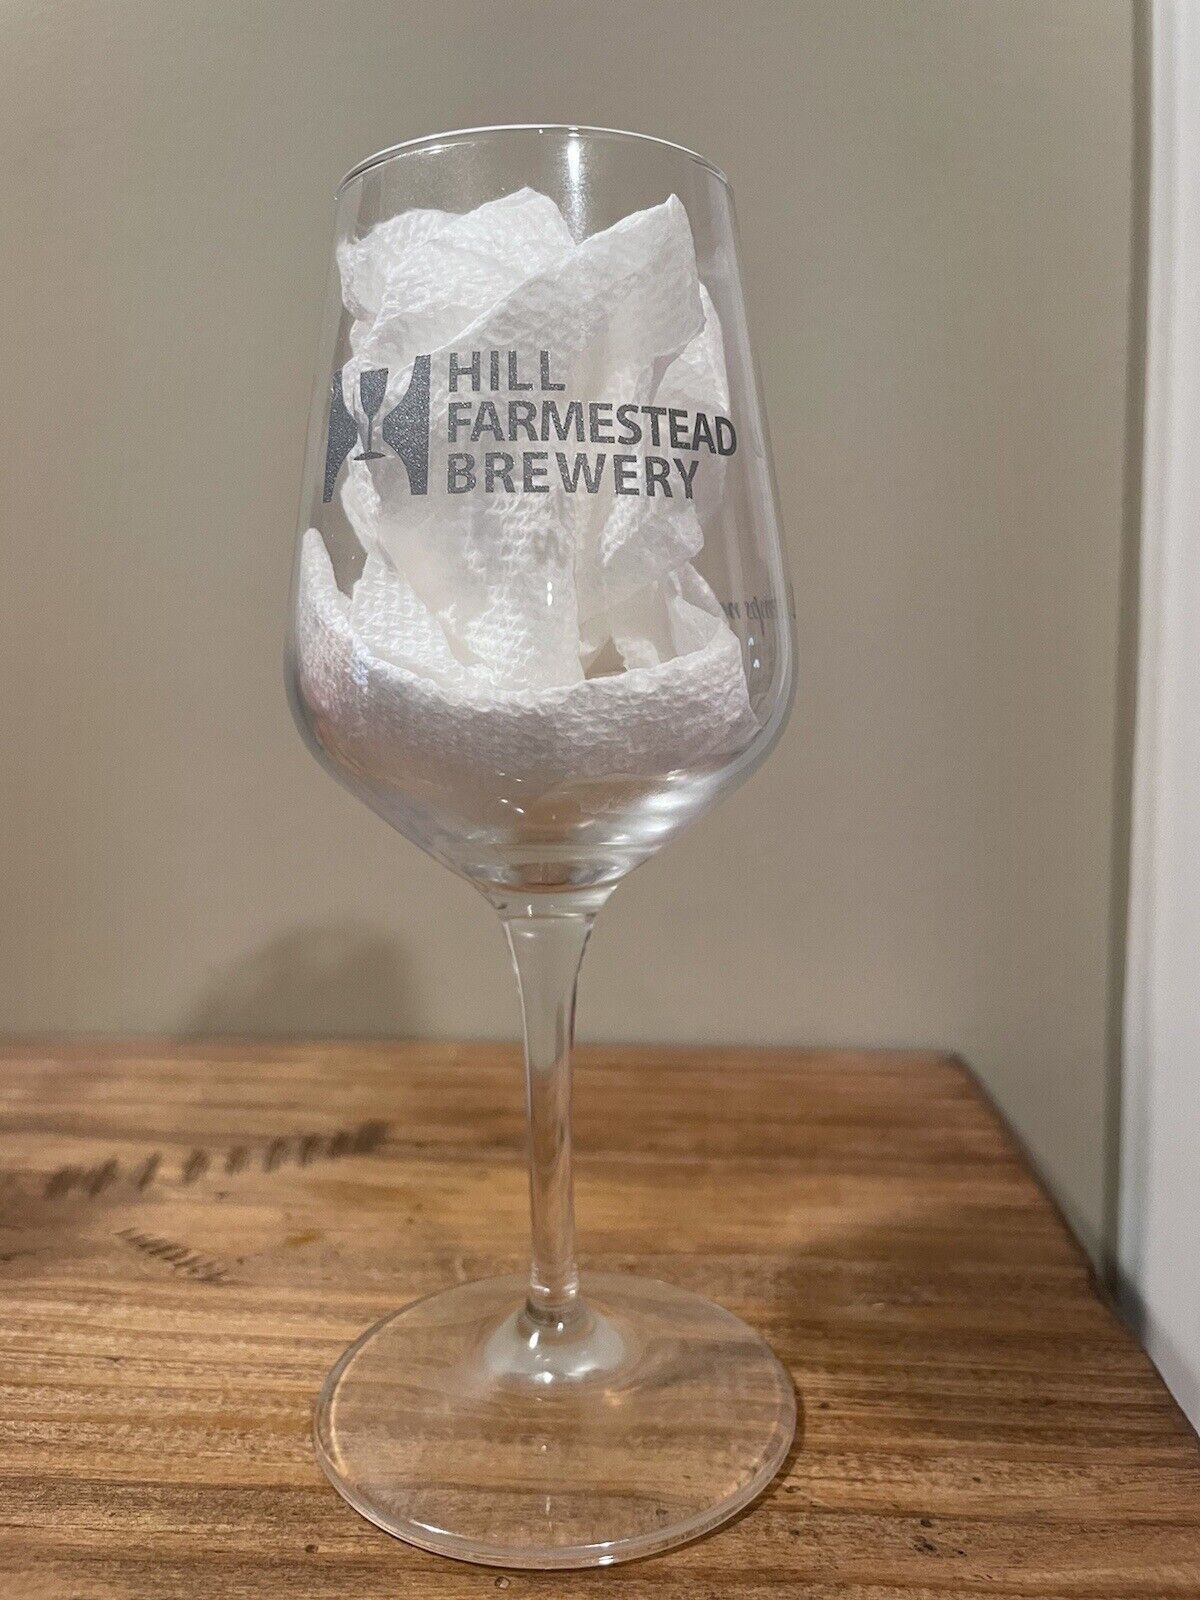 2018 Quintessence Cantillon Hill Farmstead Error Glass Spelling Farmestead Rare